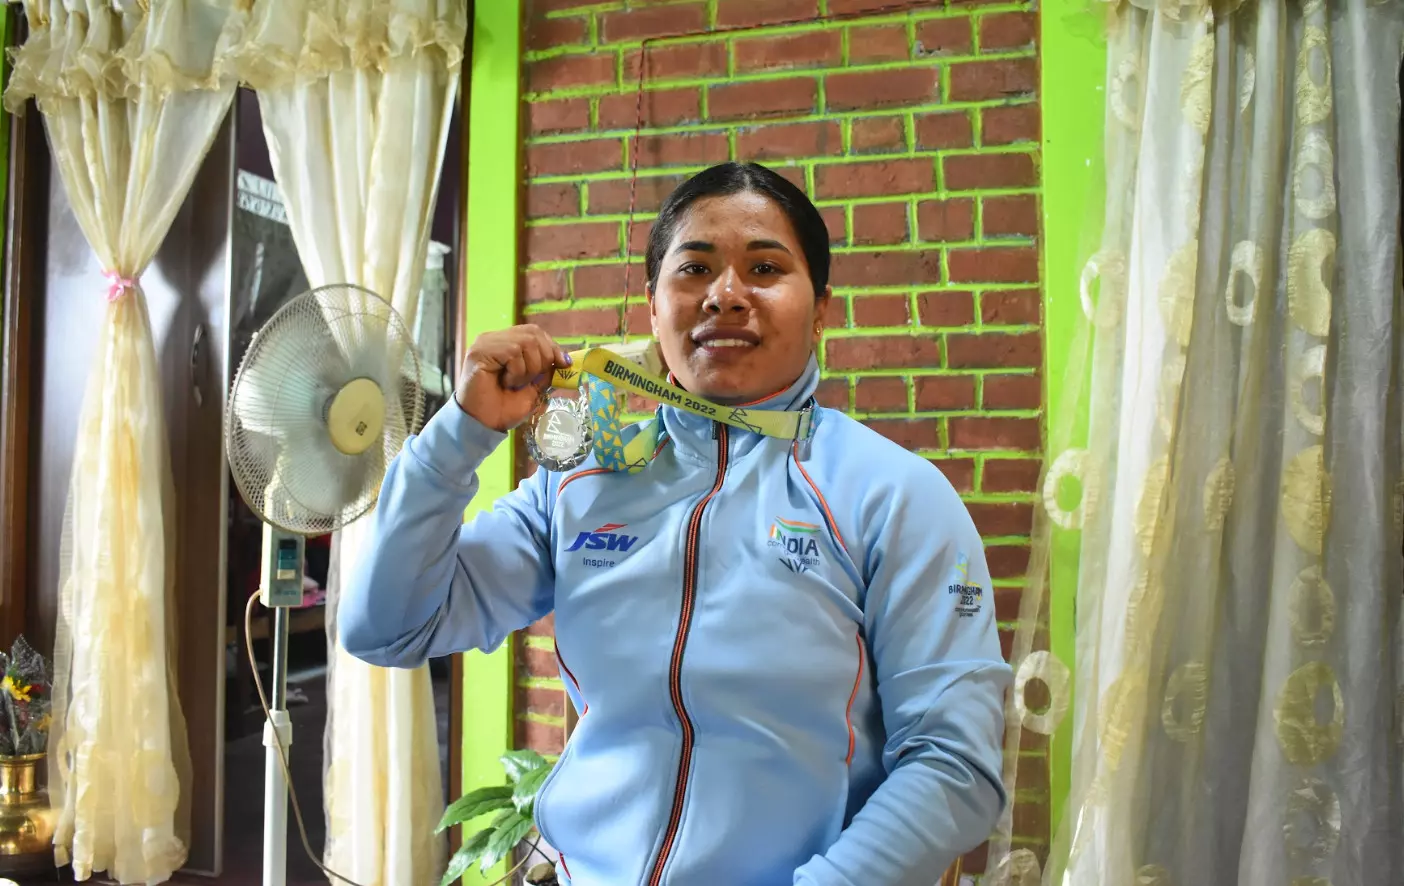 Bindyarani Devi holds aloft her CWG medal in the living room of her house